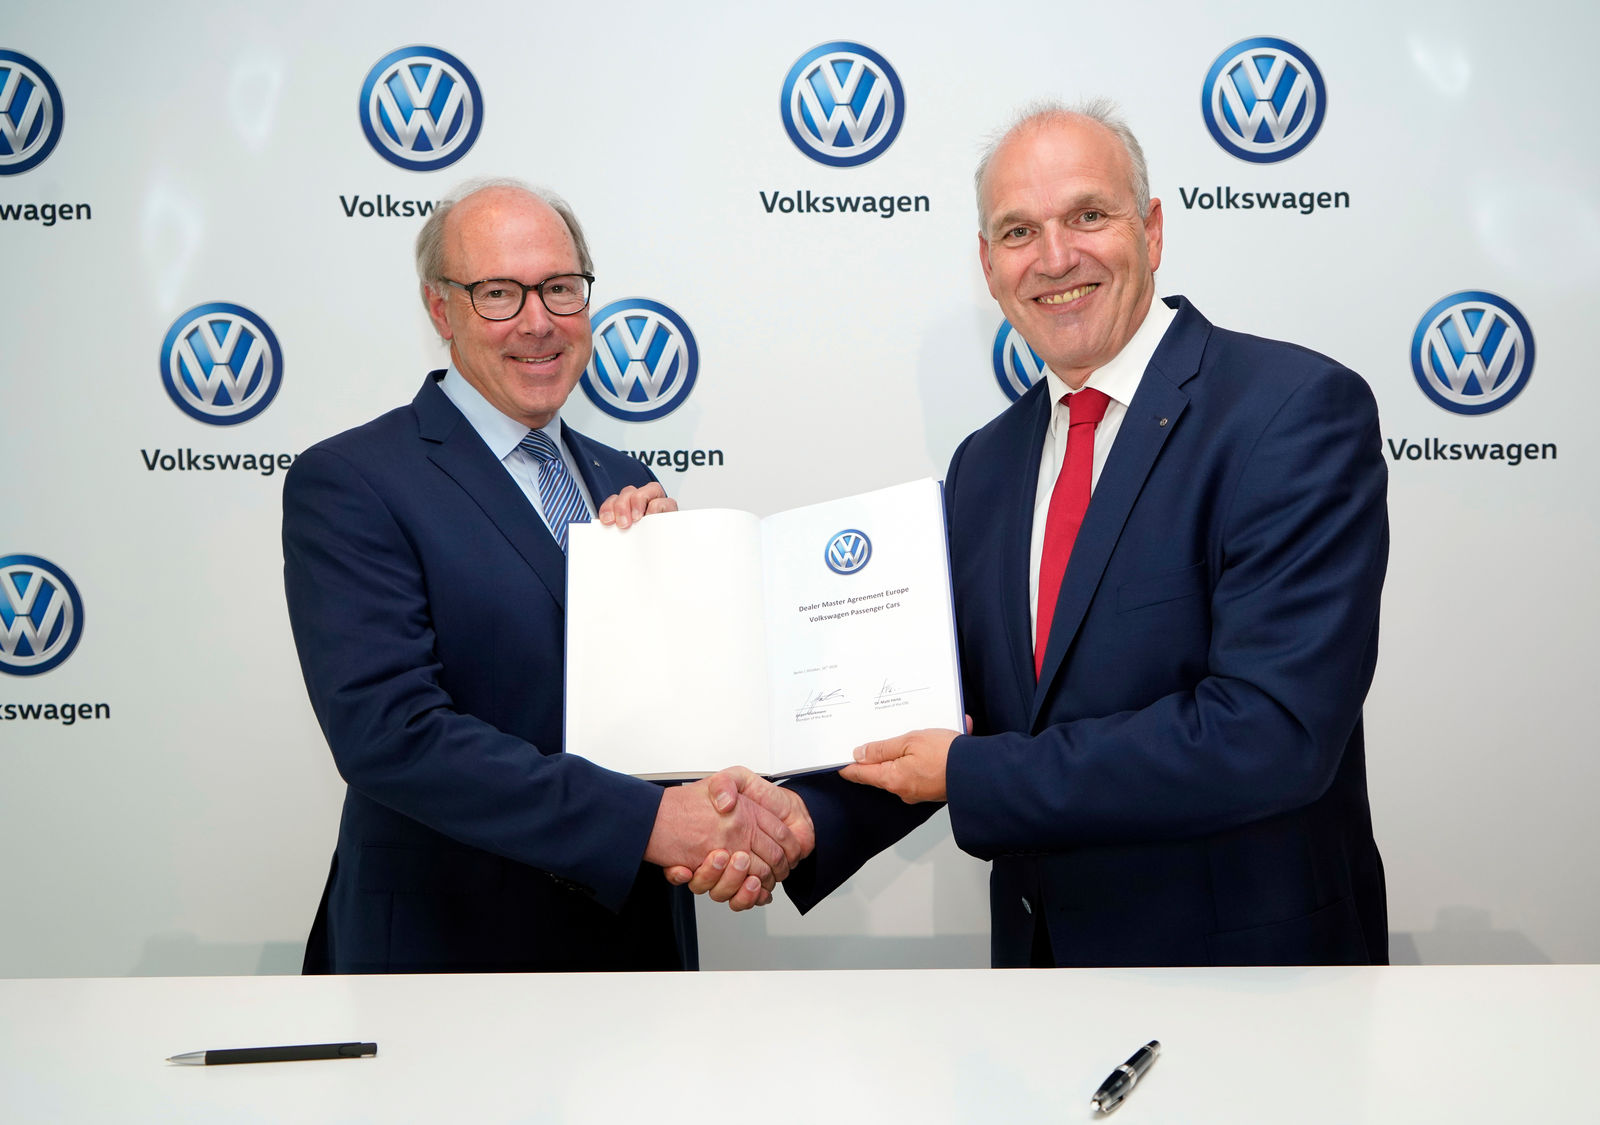 Volkswagen digitalizes sales – New era of car buying to start in 2020